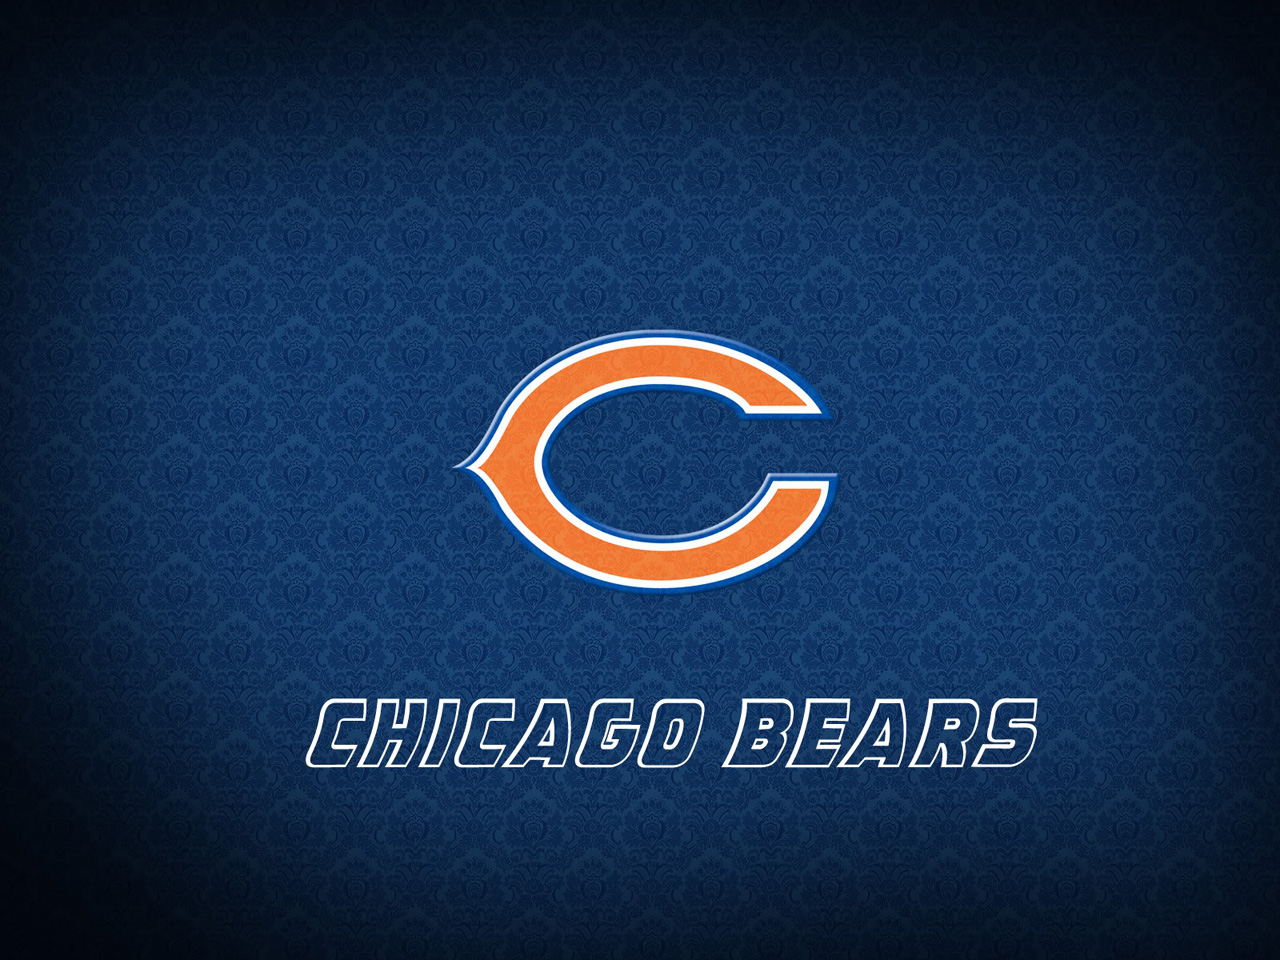 This New Chicago Bears Desktop Background Wallpaper